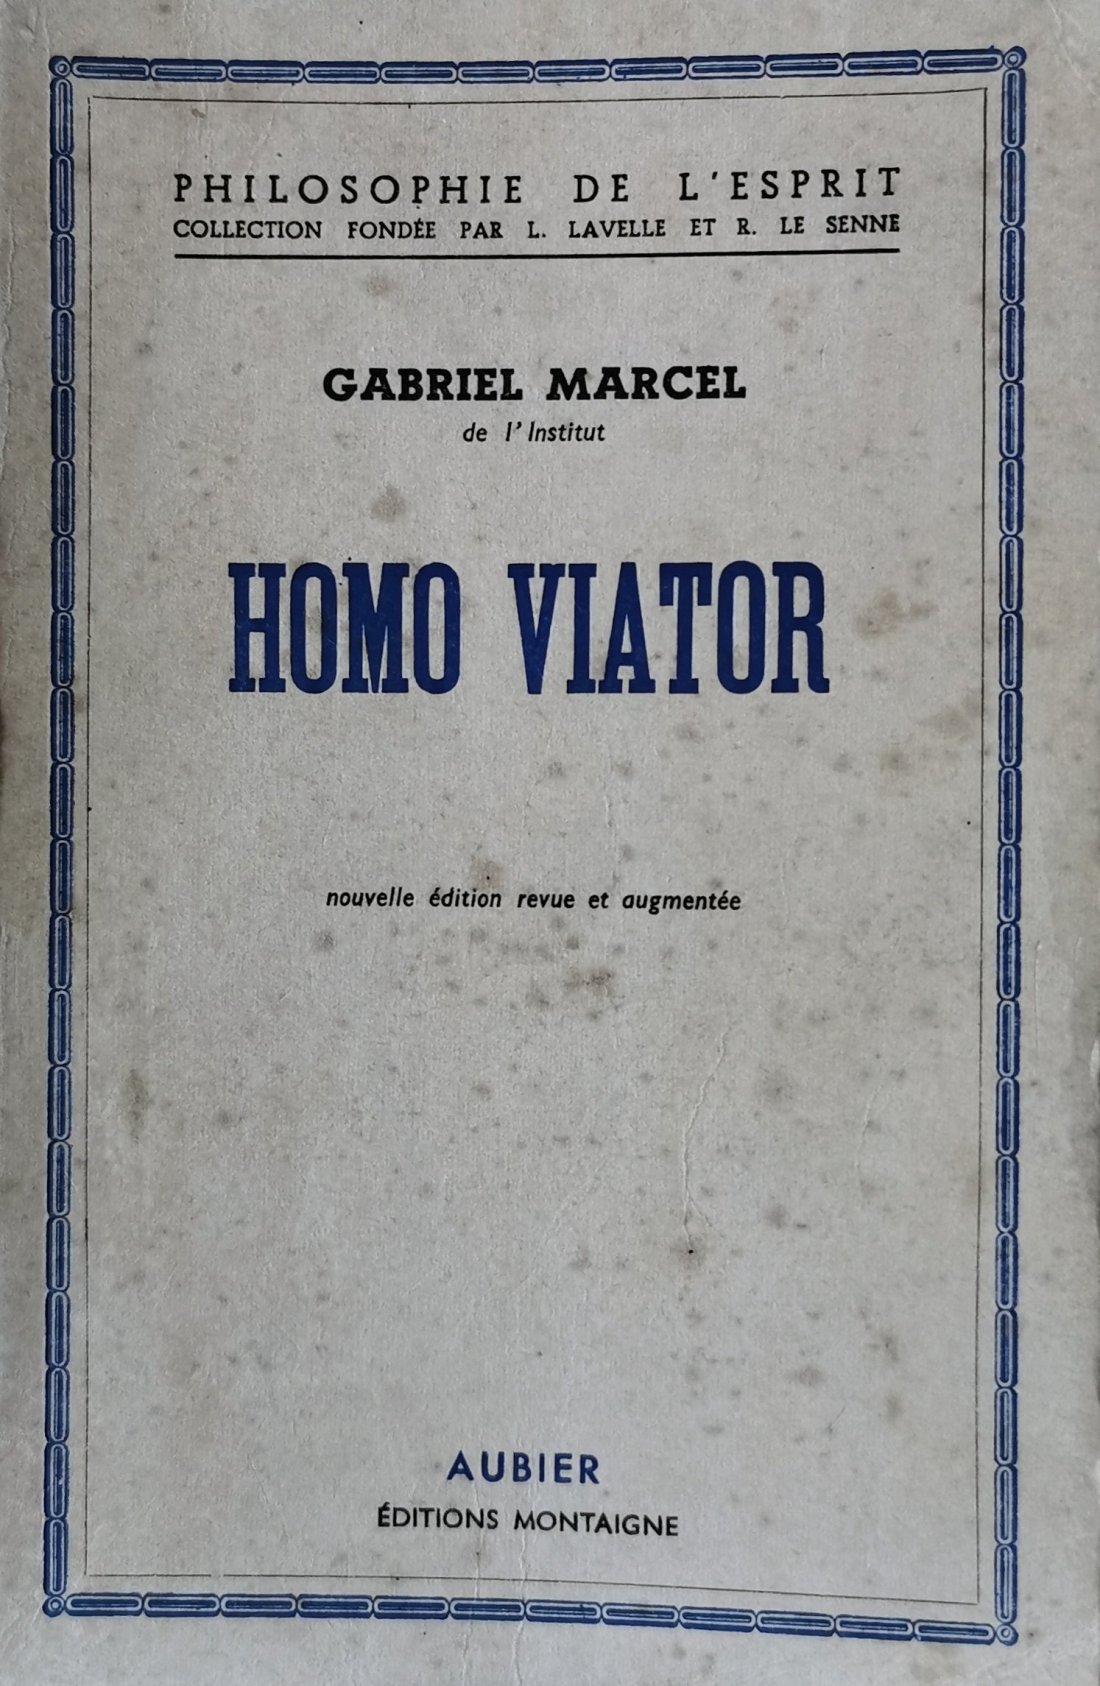 Gabriel Marcel, Homo Viator